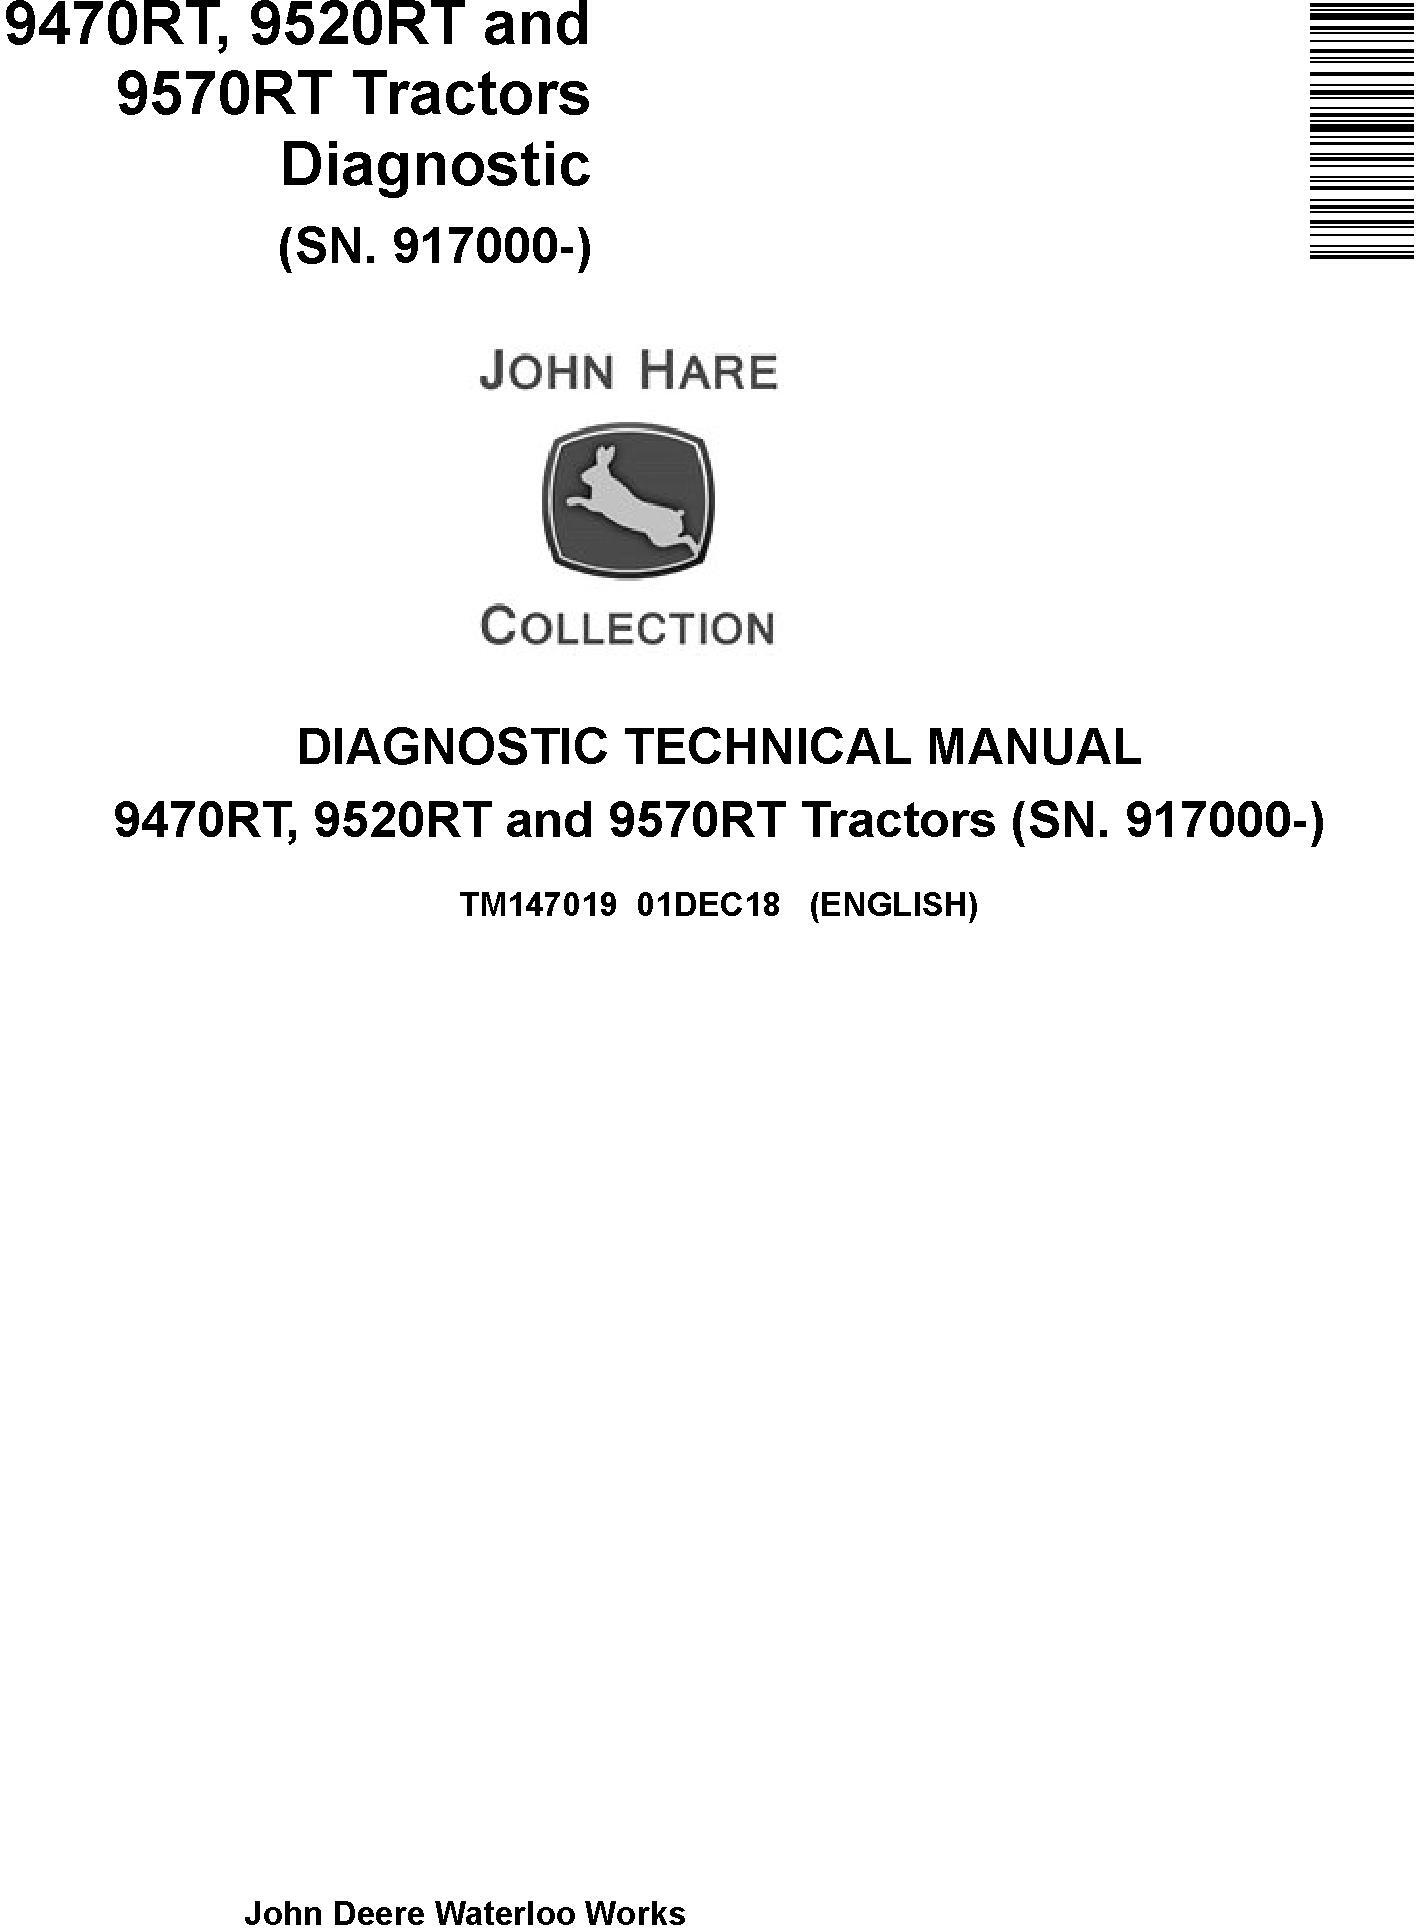 John Deere 9470RT, 9520RT and 9570RT Tractors (SN. 917000-) Diagnostic Technical Manual (TM147019)